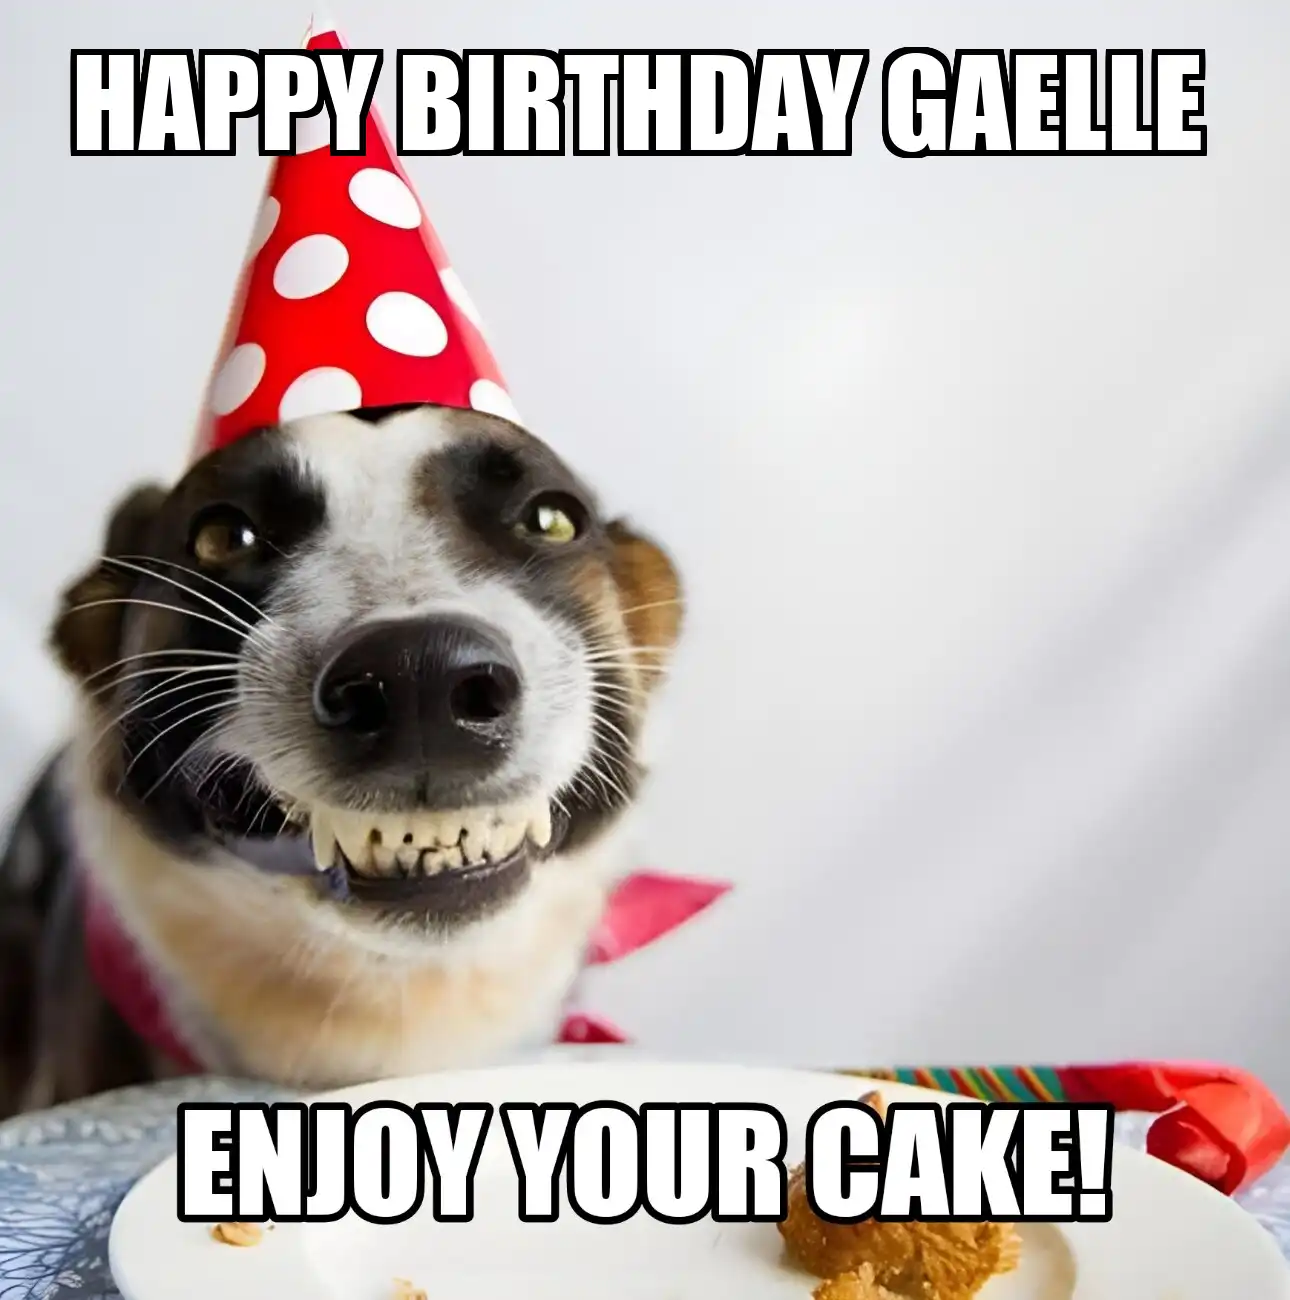 Happy Birthday Gaelle Enjoy Your Cake Dog Meme